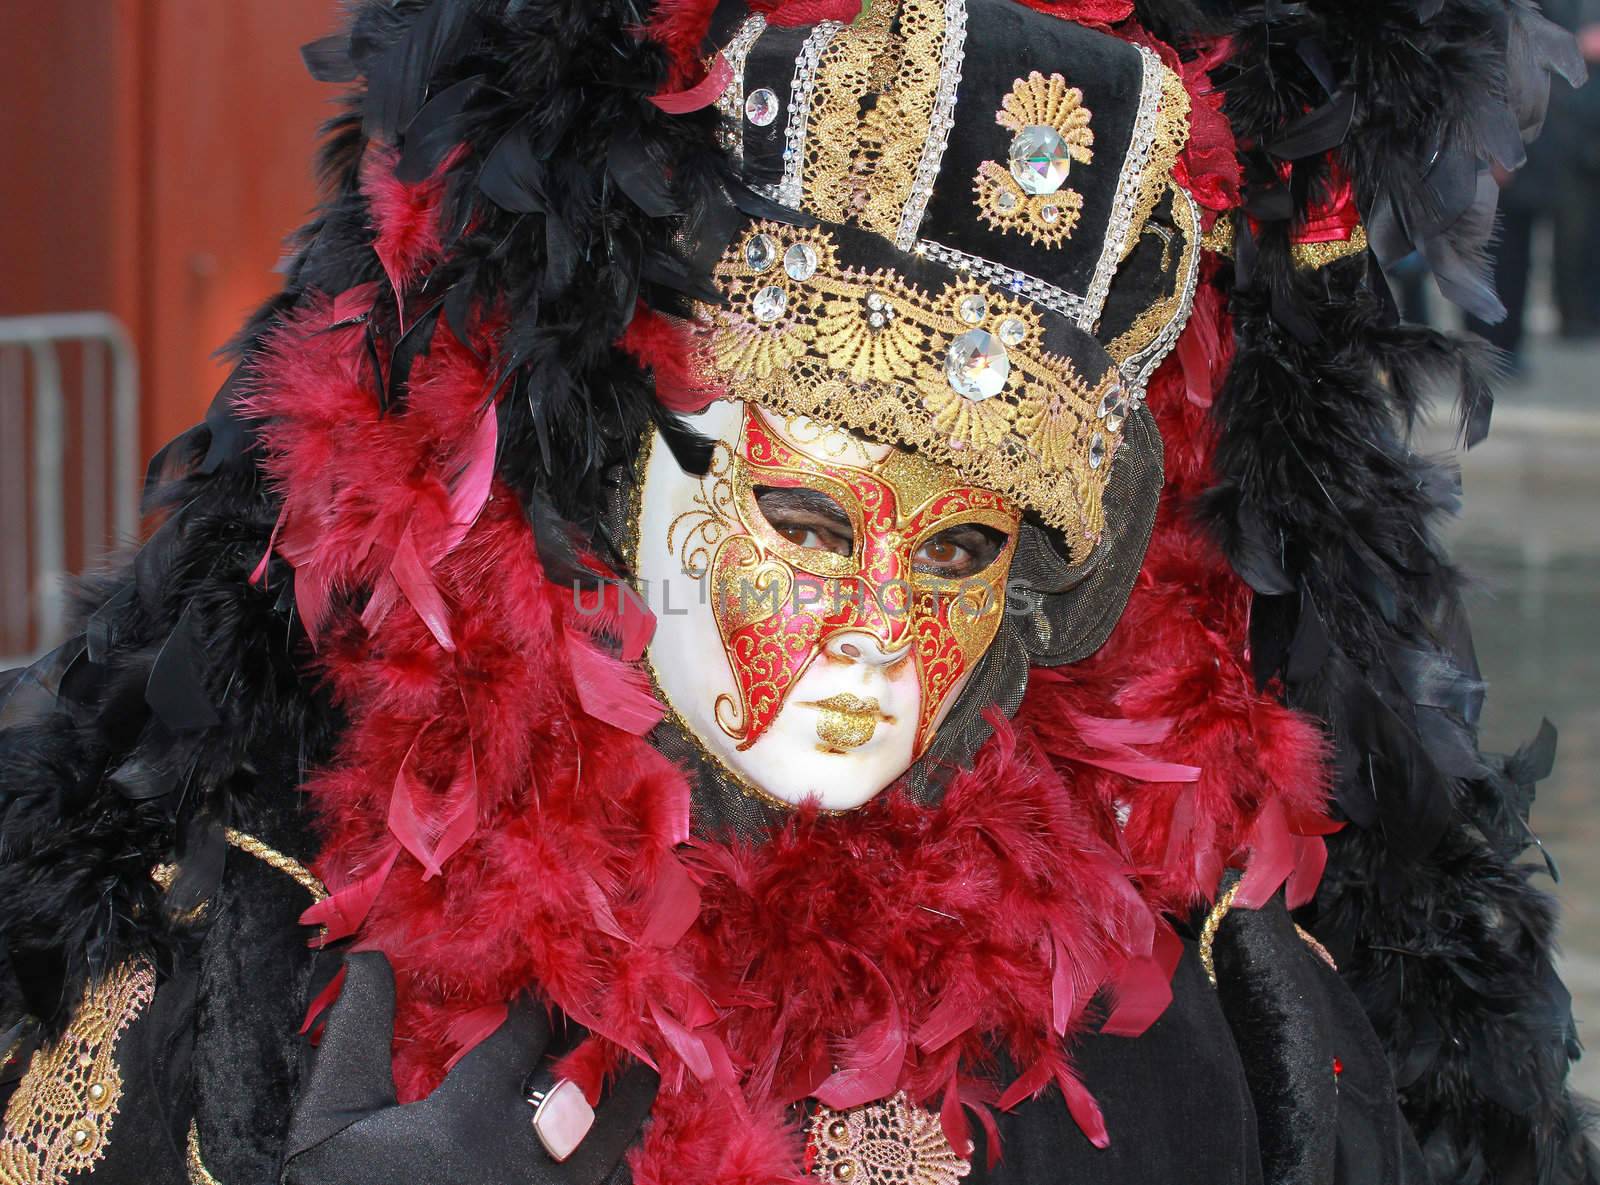   Beautiful mask in Venice, Italy